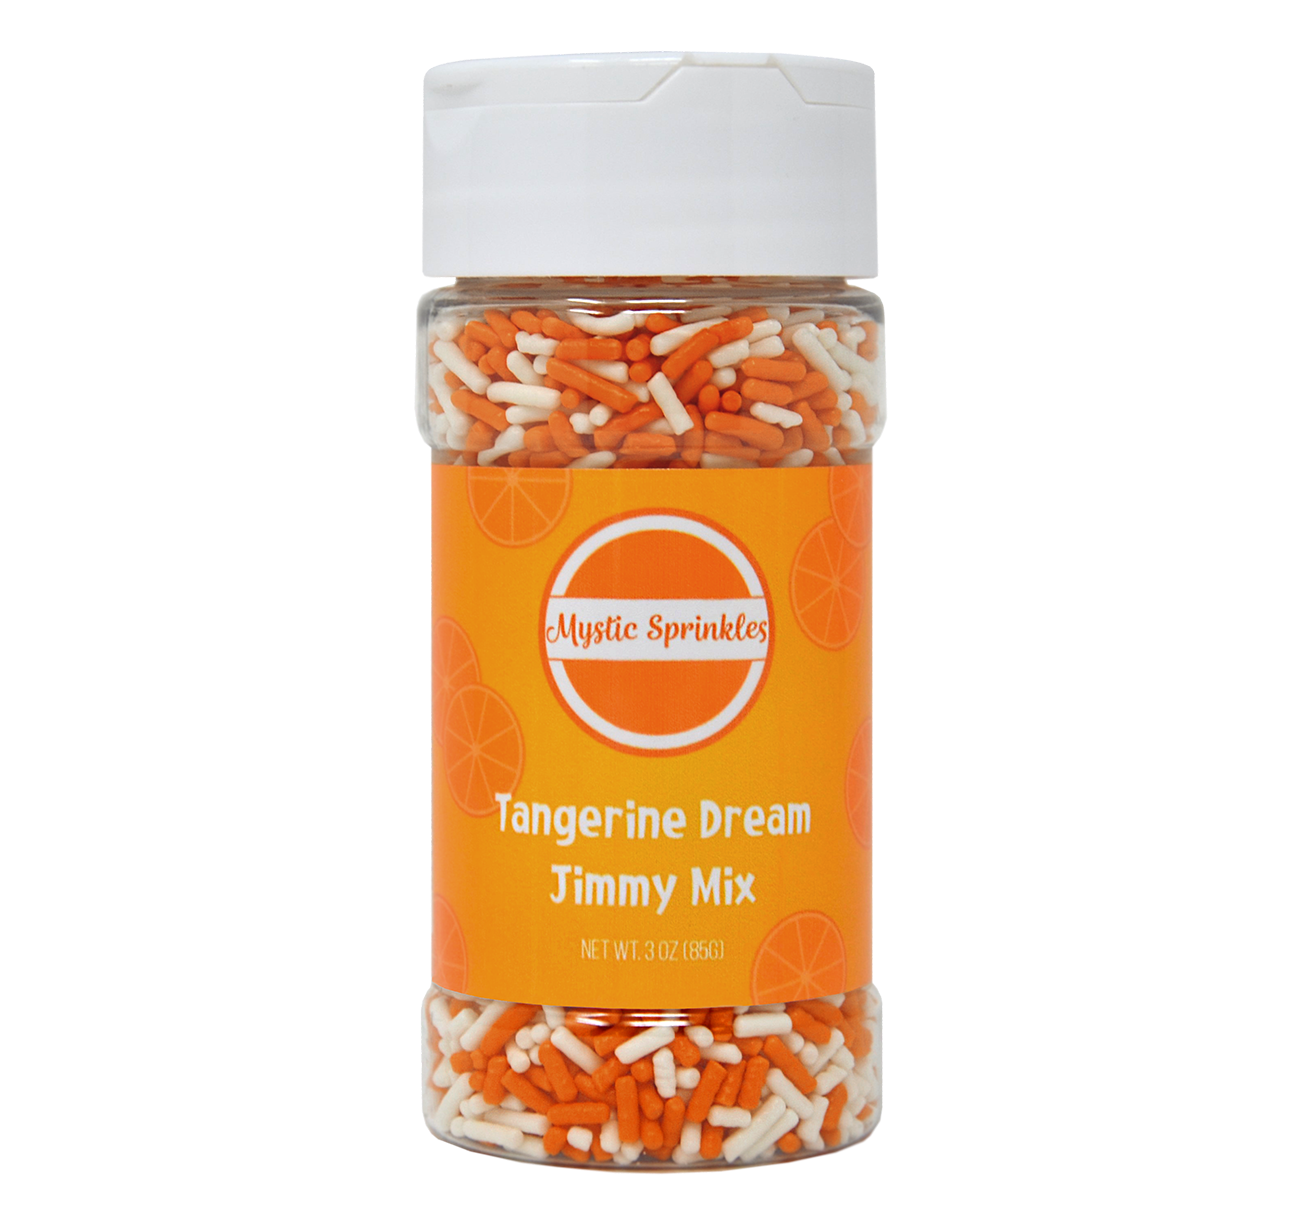 Tangerine Dream Jimmy Mix 3oz Bottle